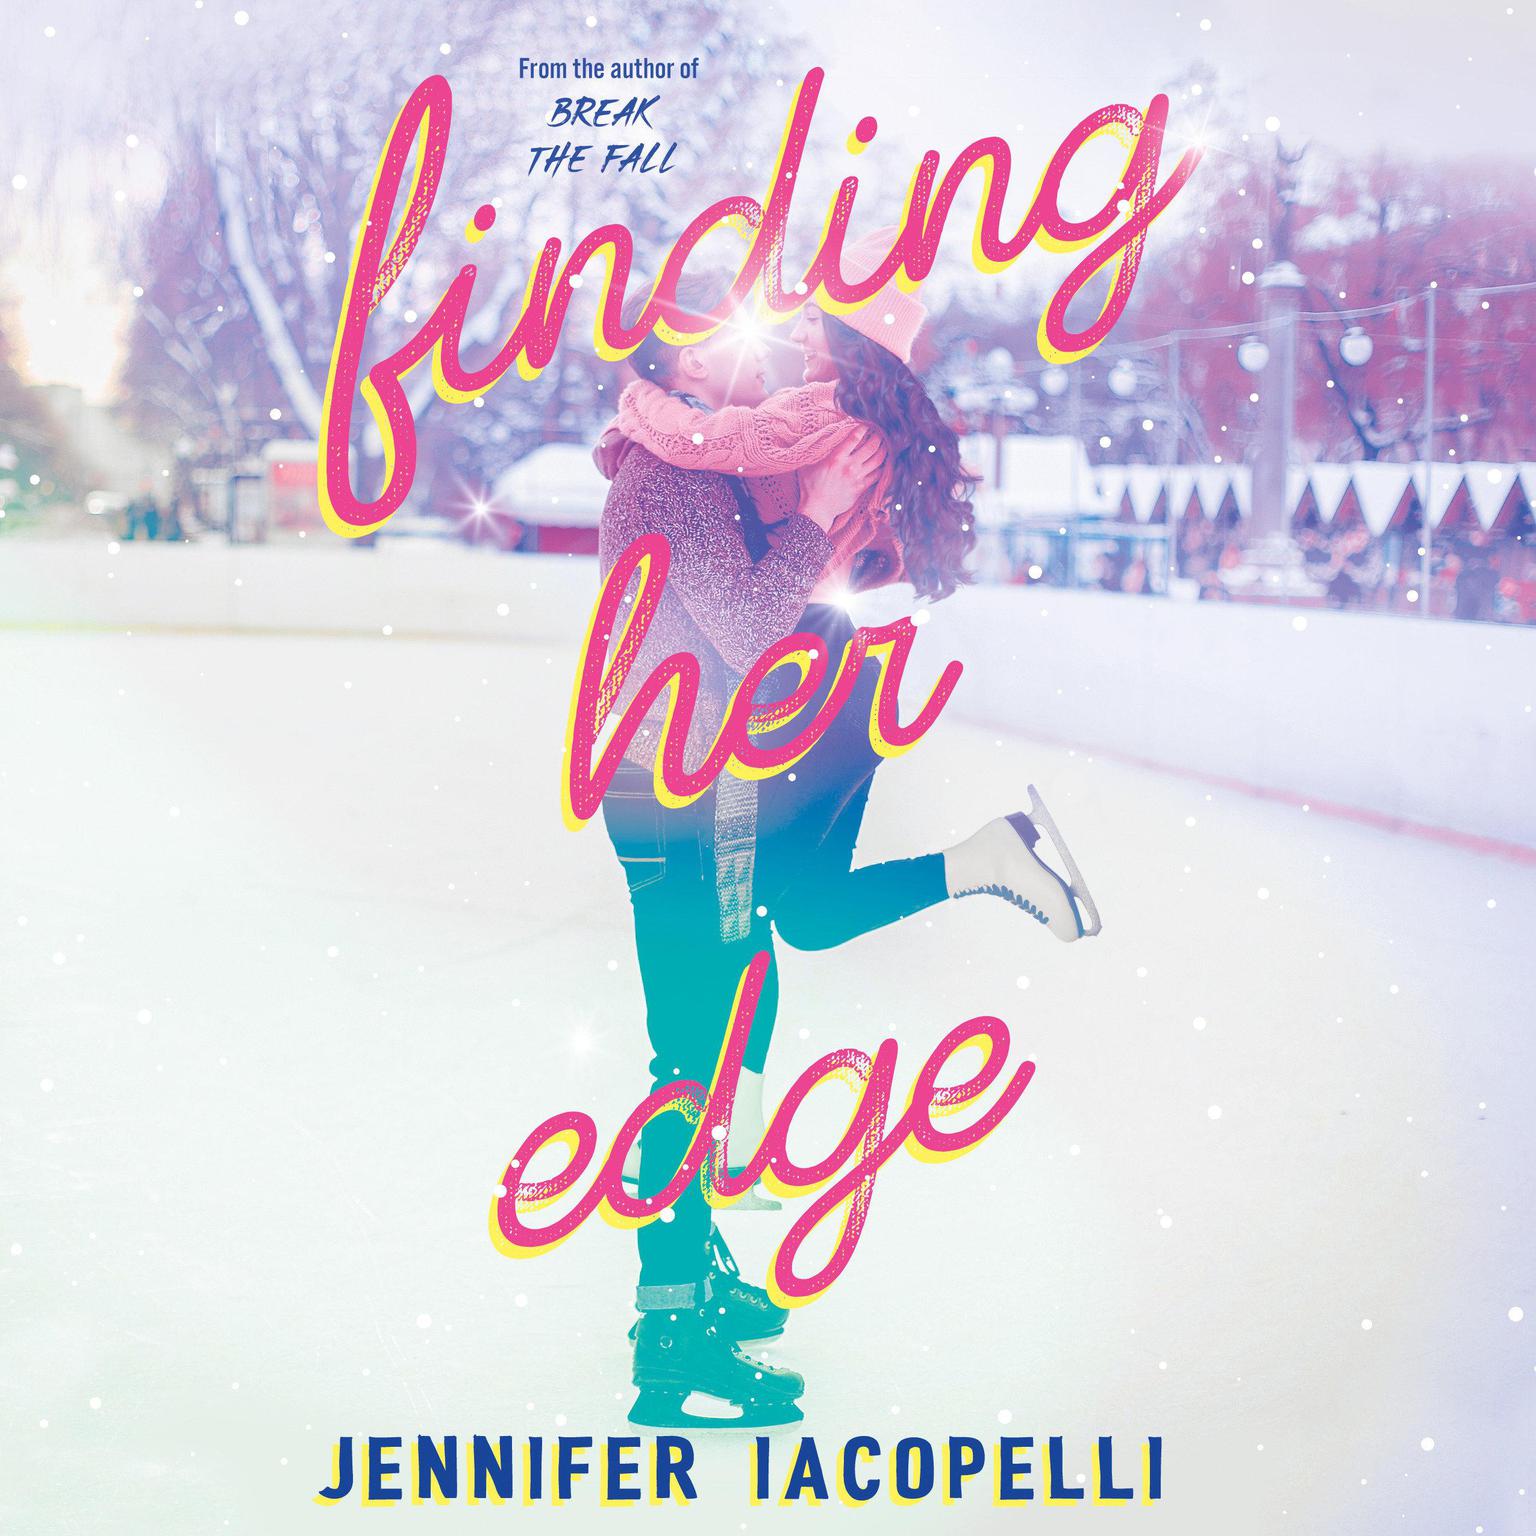 Finding Her Edge Audiobook, by Jennifer Iacopelli